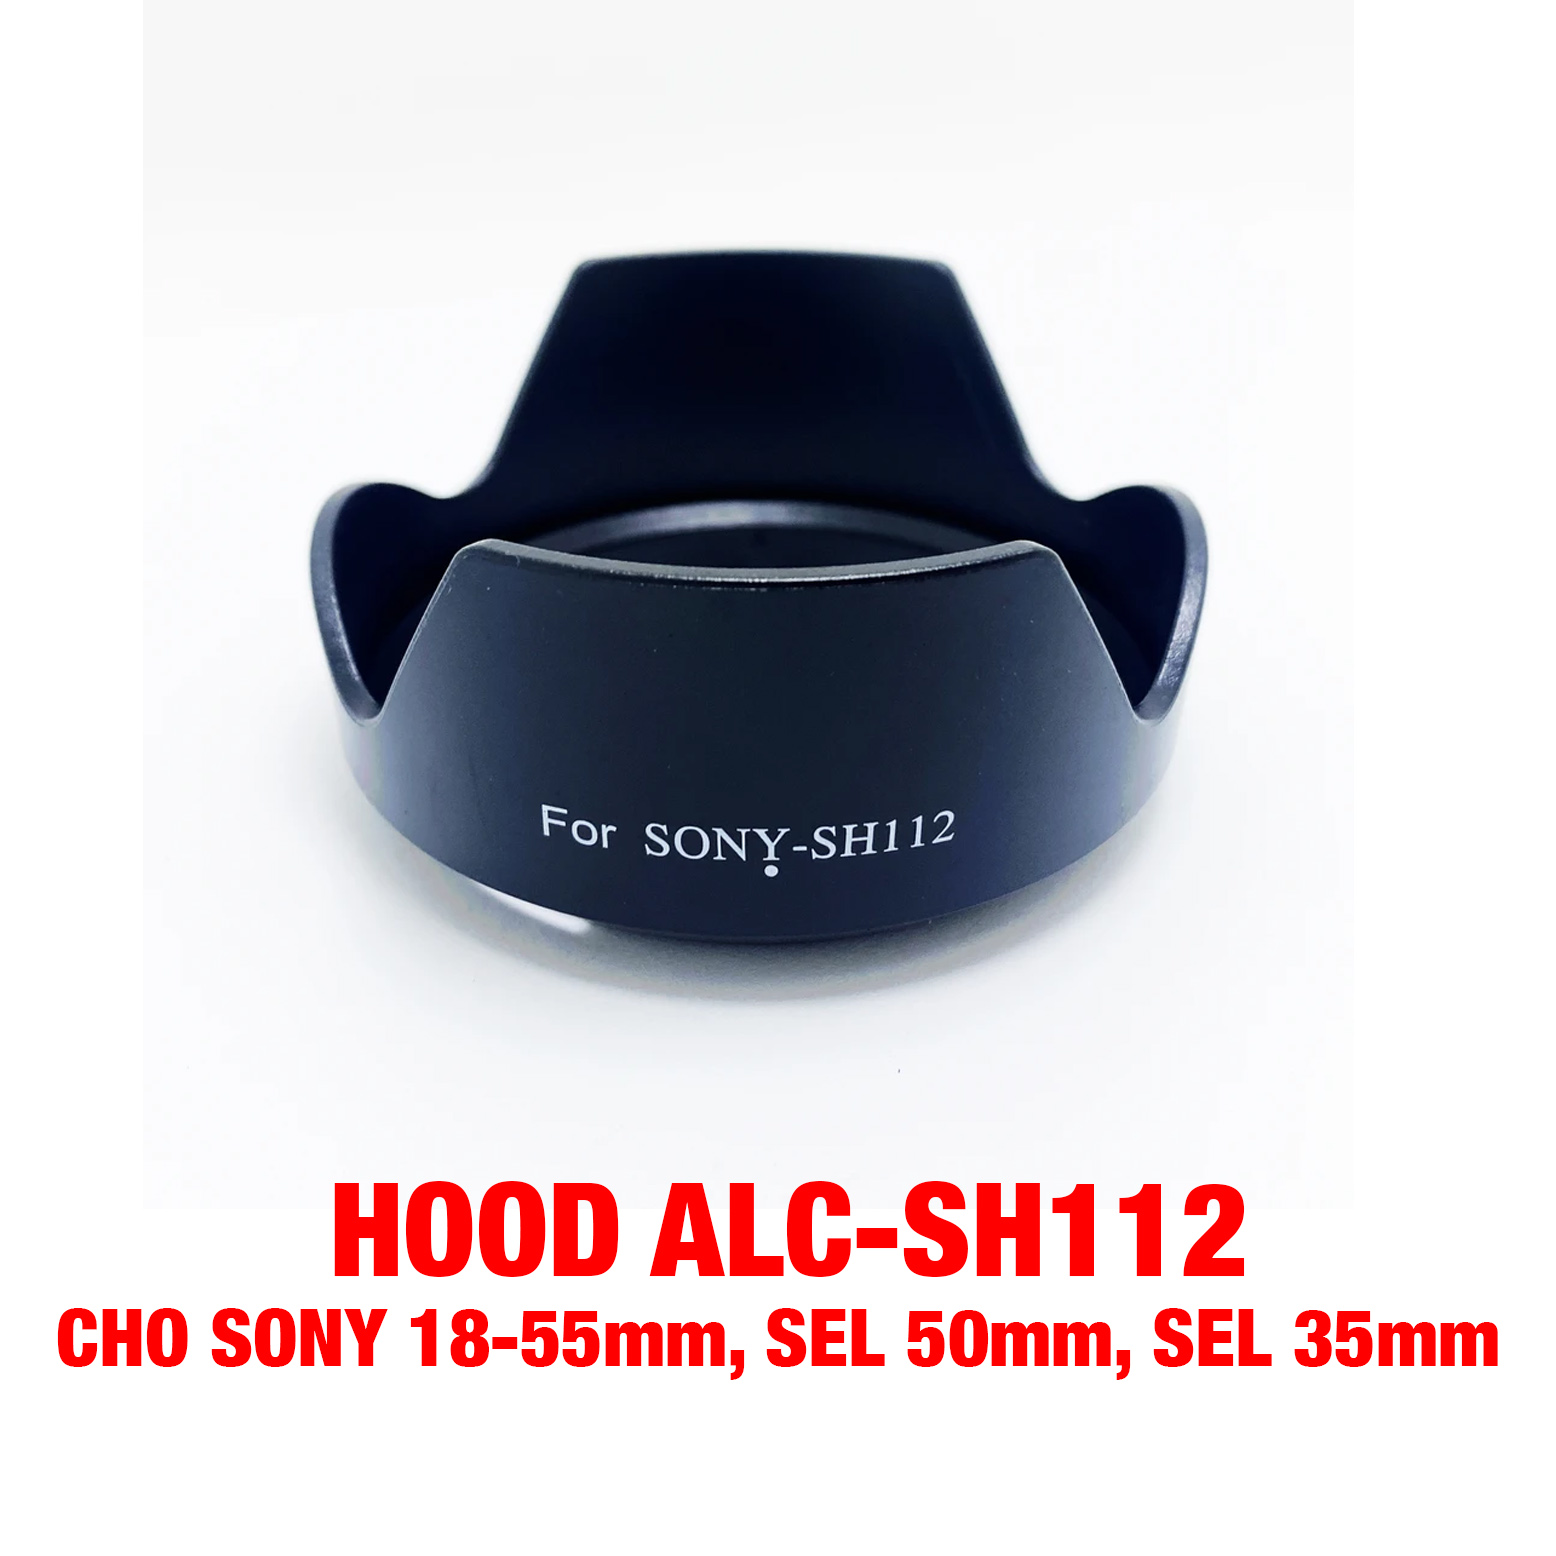 Hood ALC-SH112 cho lens Sony SEL 18-55mm SEL 35mm SEL 50mm...